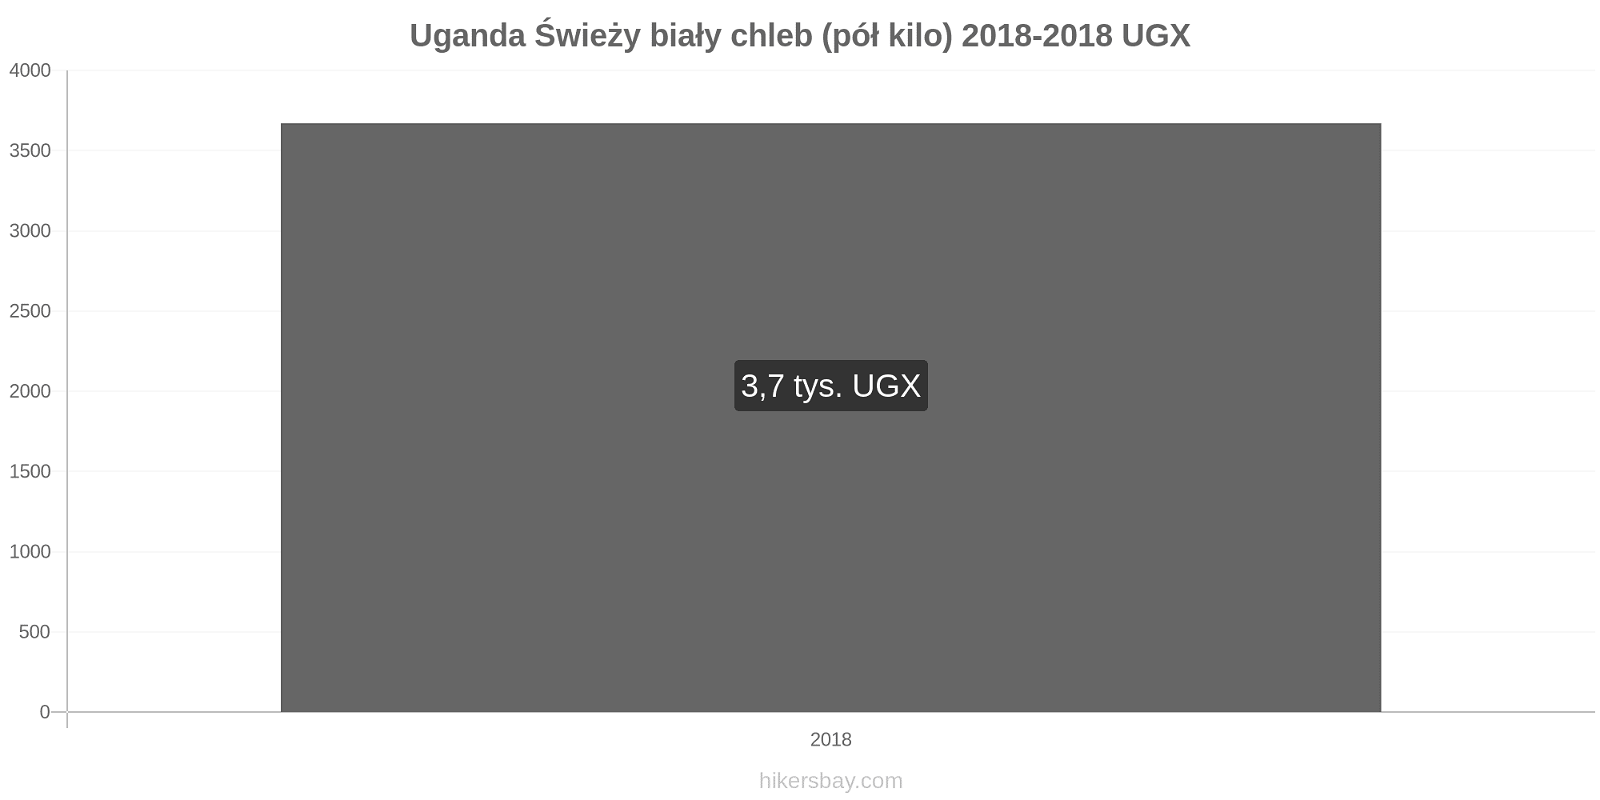 Uganda zmiany cen Chleb pół kilo hikersbay.com